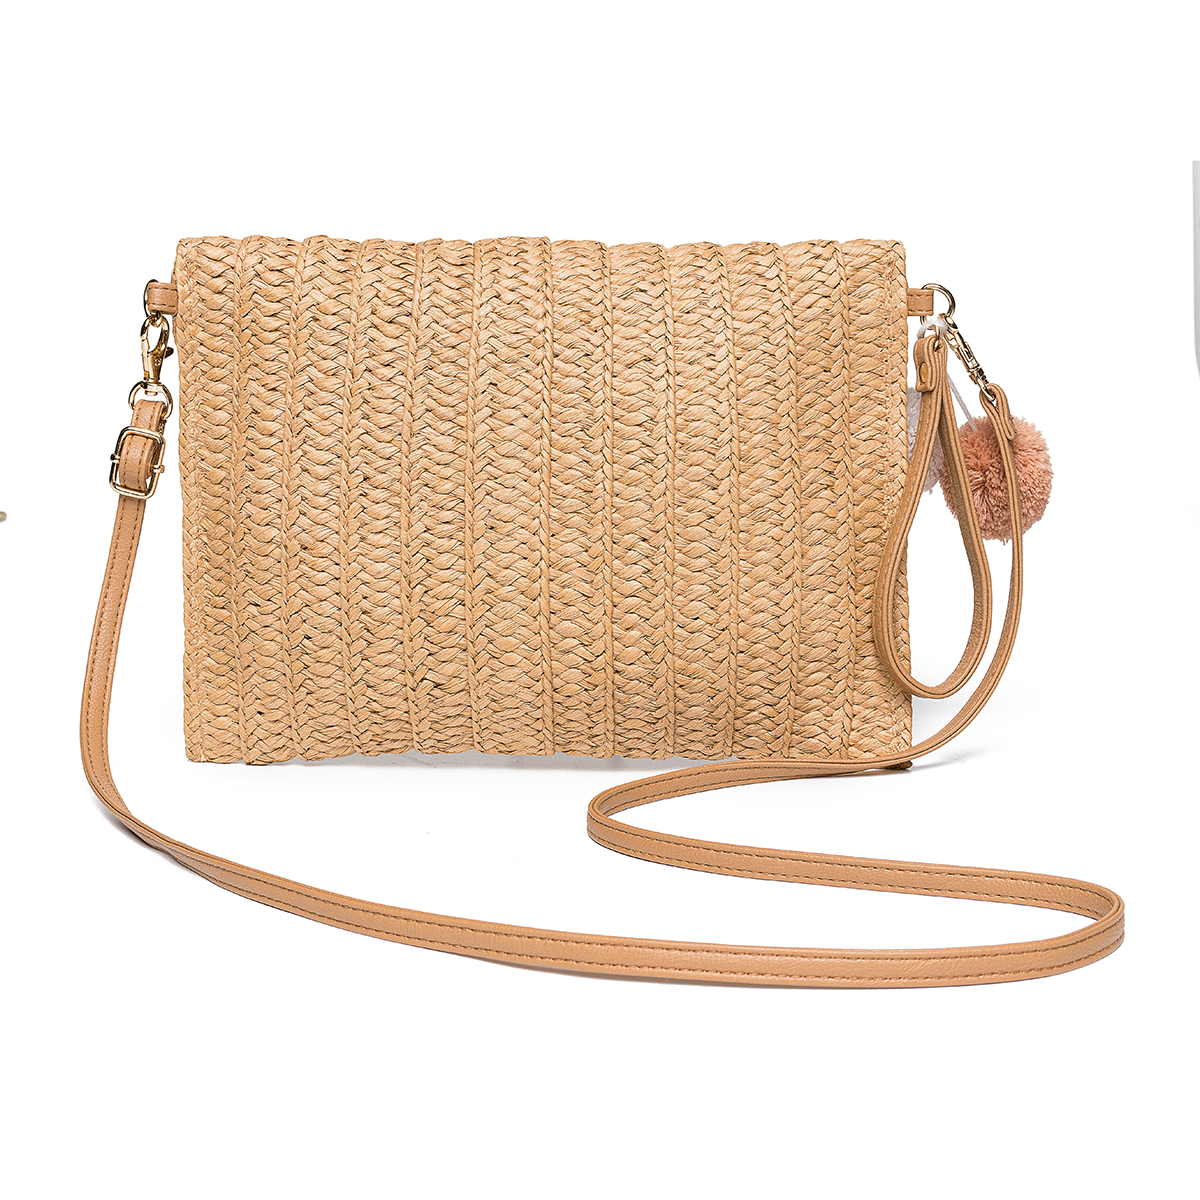 JOSEKO Straw Shoulder Bags For Women, Handmade Crossbody Summer Beach